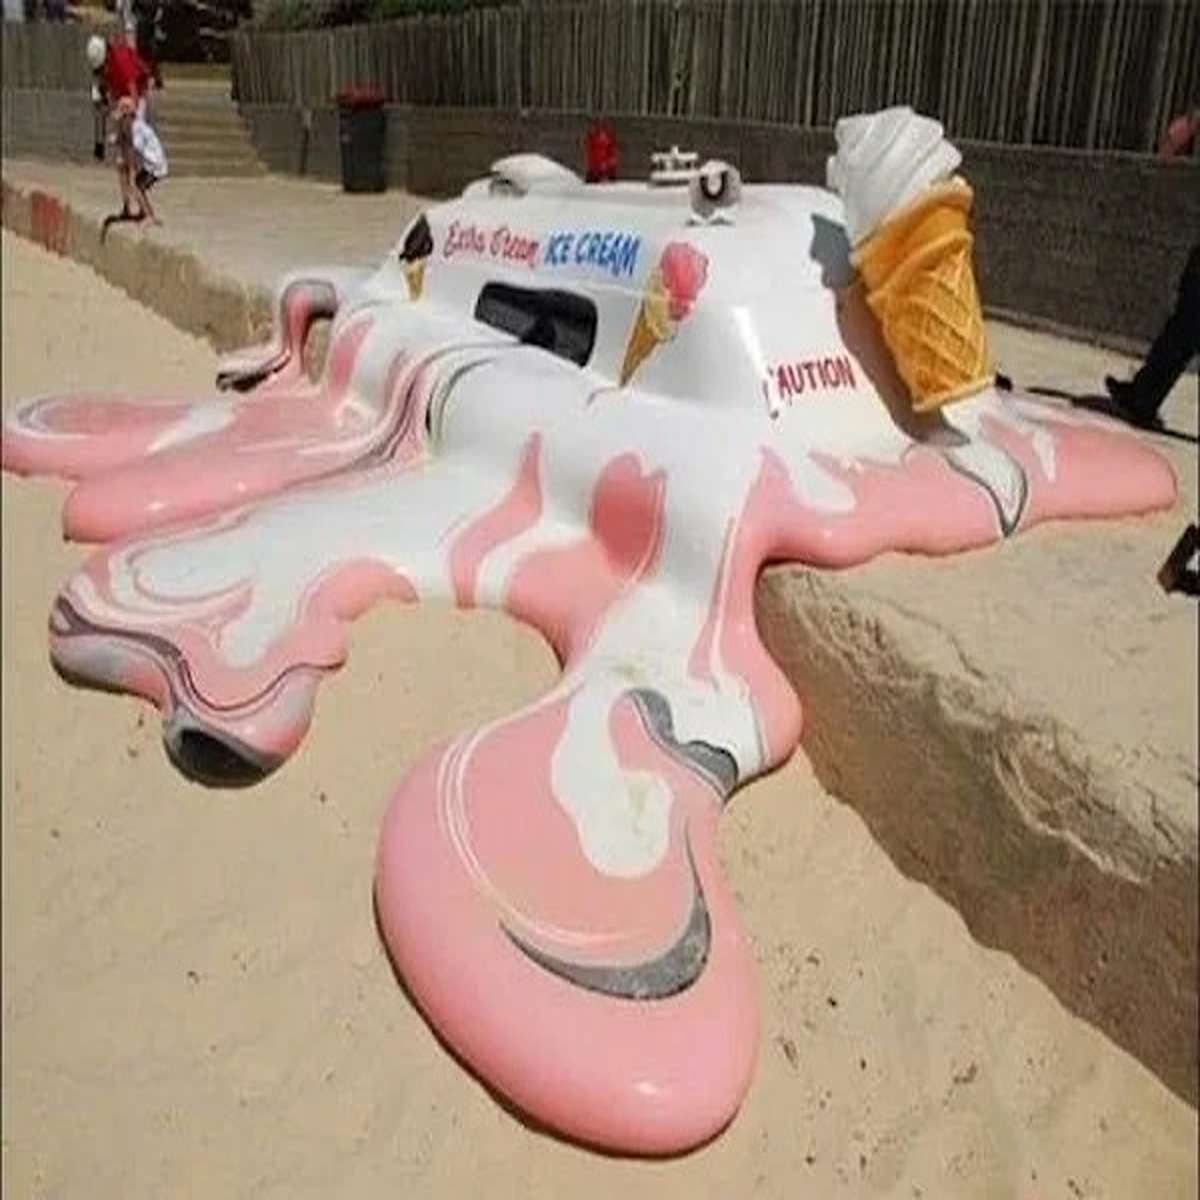 dank memes - melted ice cream truck - Ets SteamKCE Cream Aution